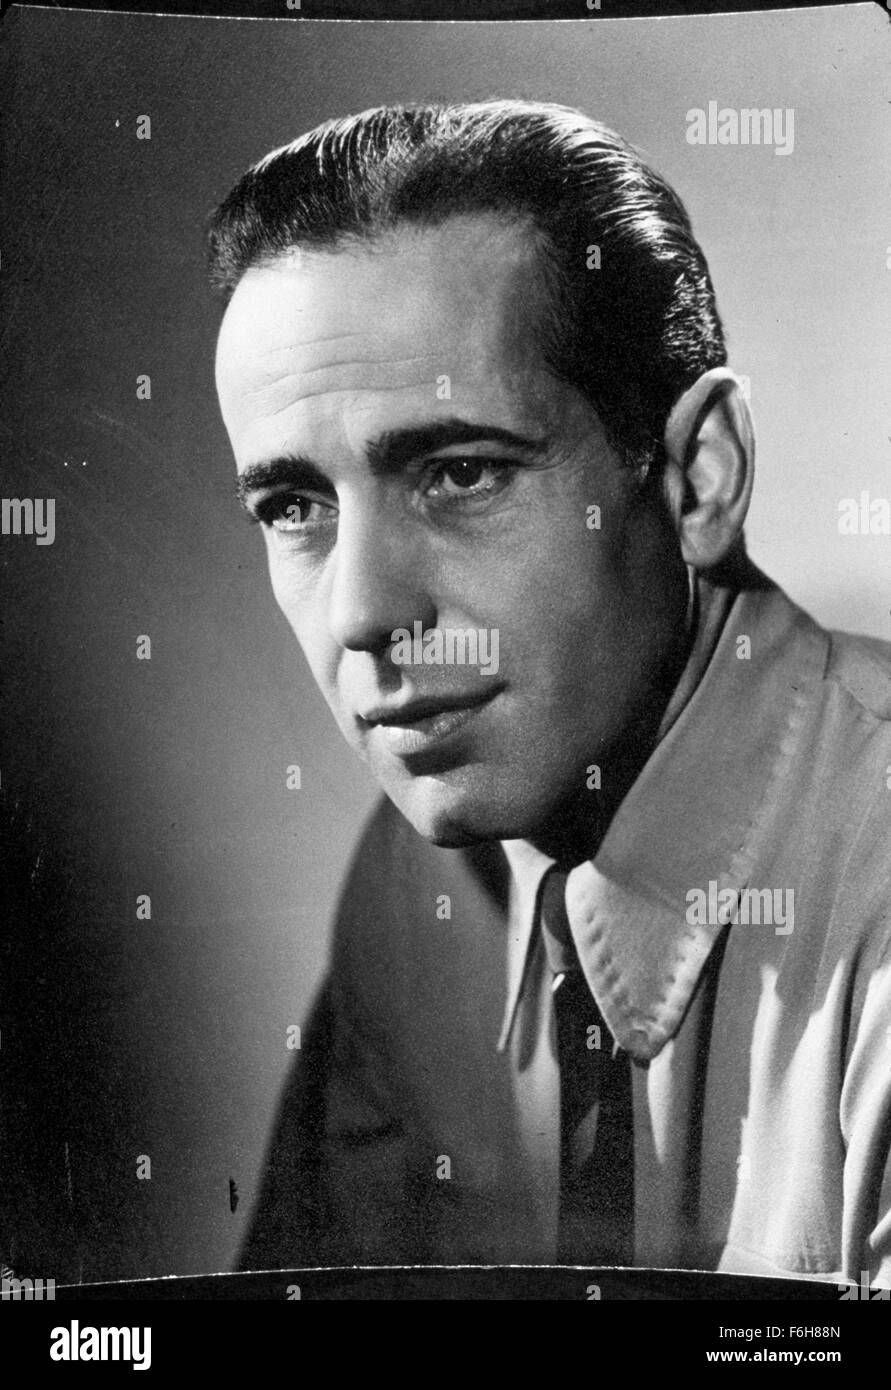 1941, Film Title: MALTESE FALCON, Director: JOHN HUSTON, Studio: WARNER, Pictured: HUMPHREY BOGART, HAIR - SLICKED, SHIRT, TIE, HEAD SHOT, PORTRAIT. (Credit Image: SNAP) Stock Photo